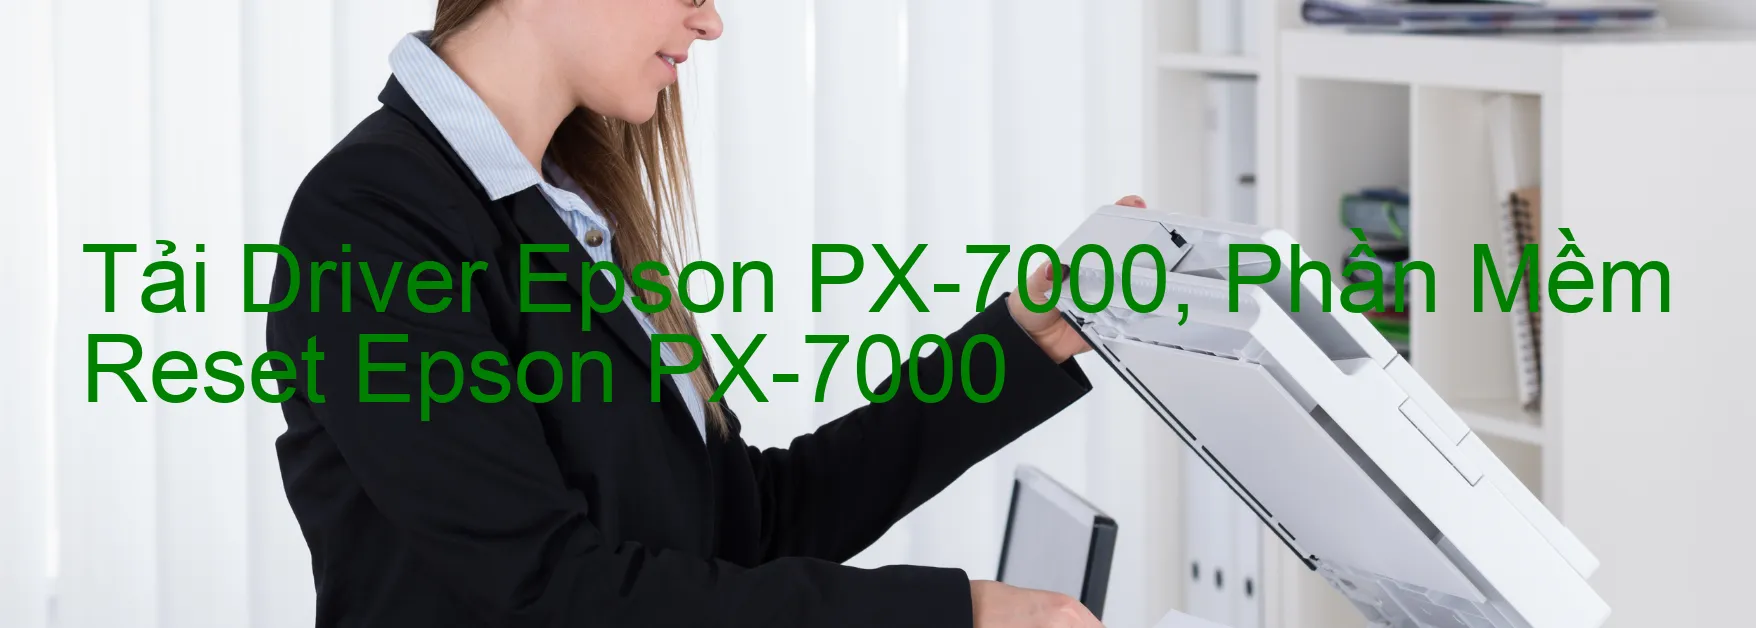 Driver Epson PX-7000, Phần Mềm Reset Epson PX-7000